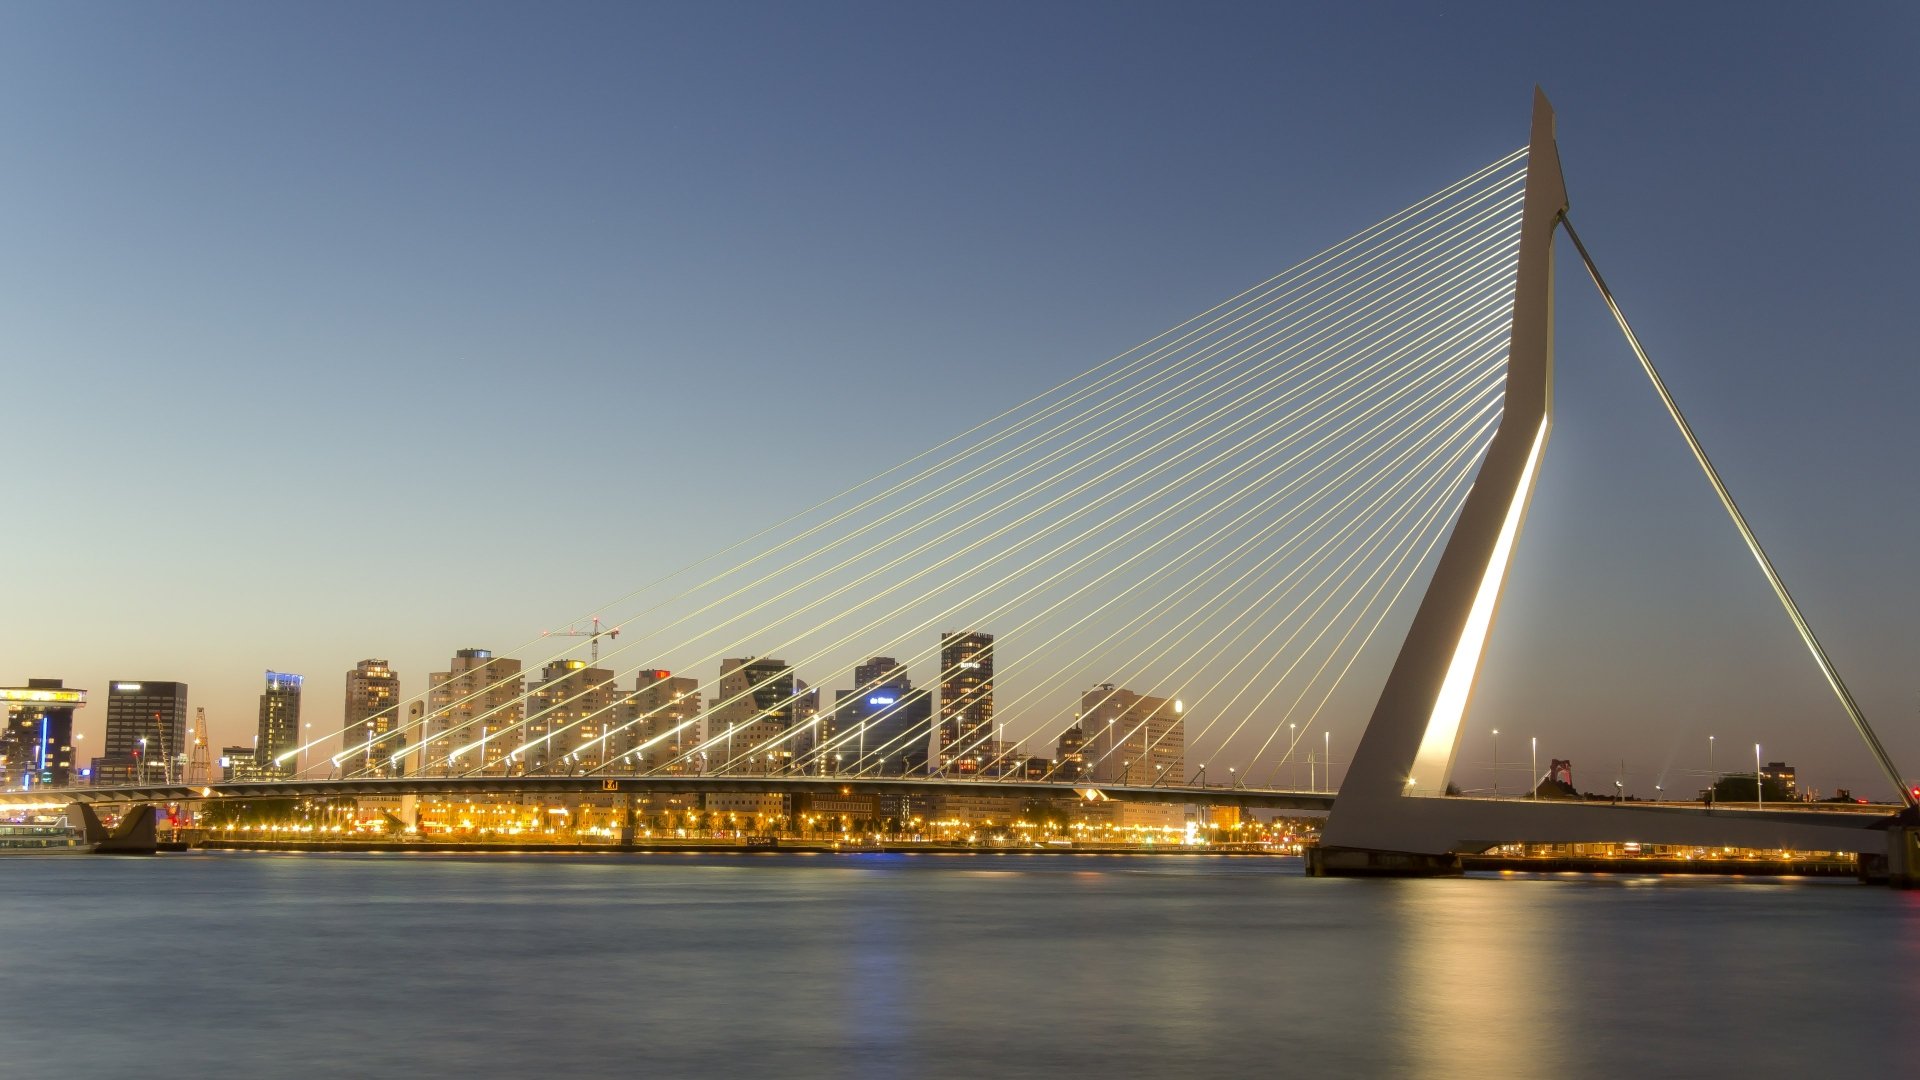 The Erasmus Bridge In Rotterdam Netherlands 4k Ultra HD Wallpaper and